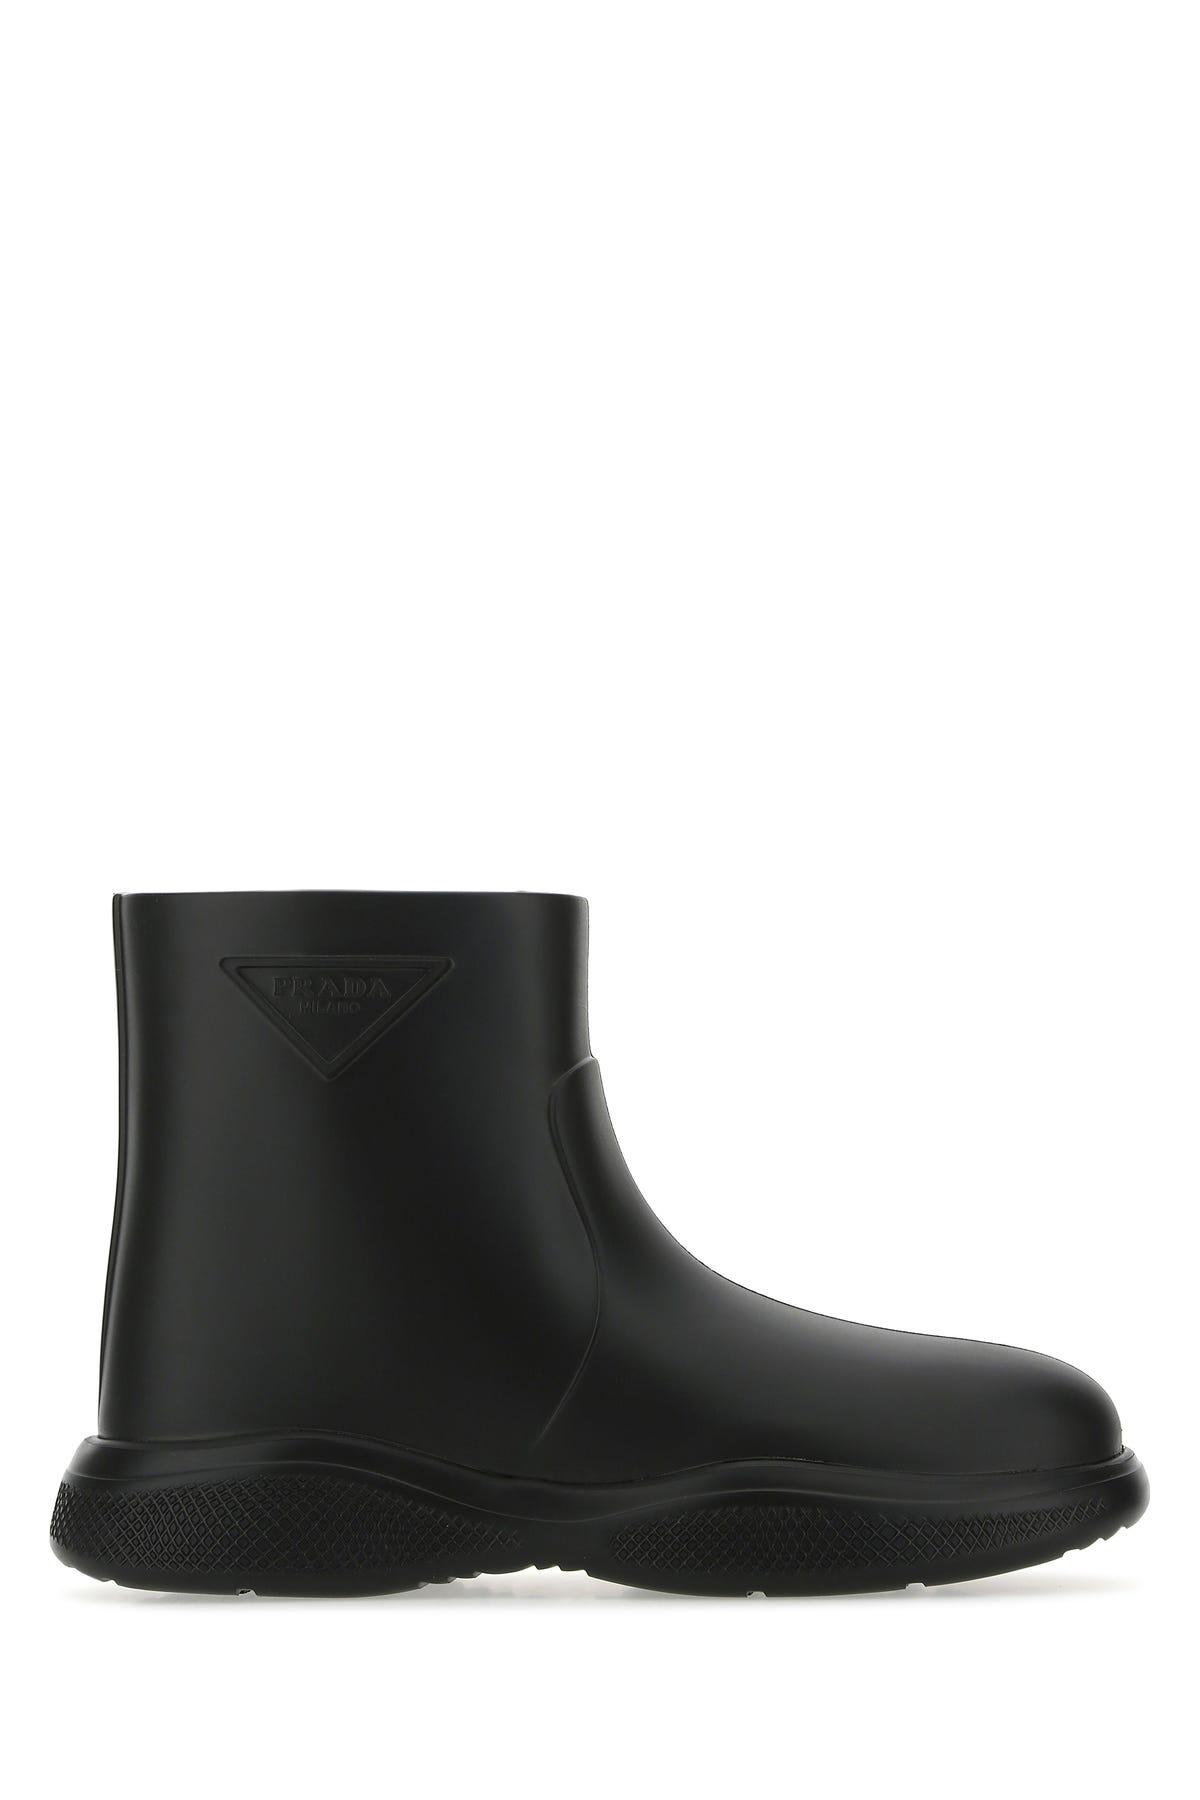 Prada Rubber Boots in Black | Lyst